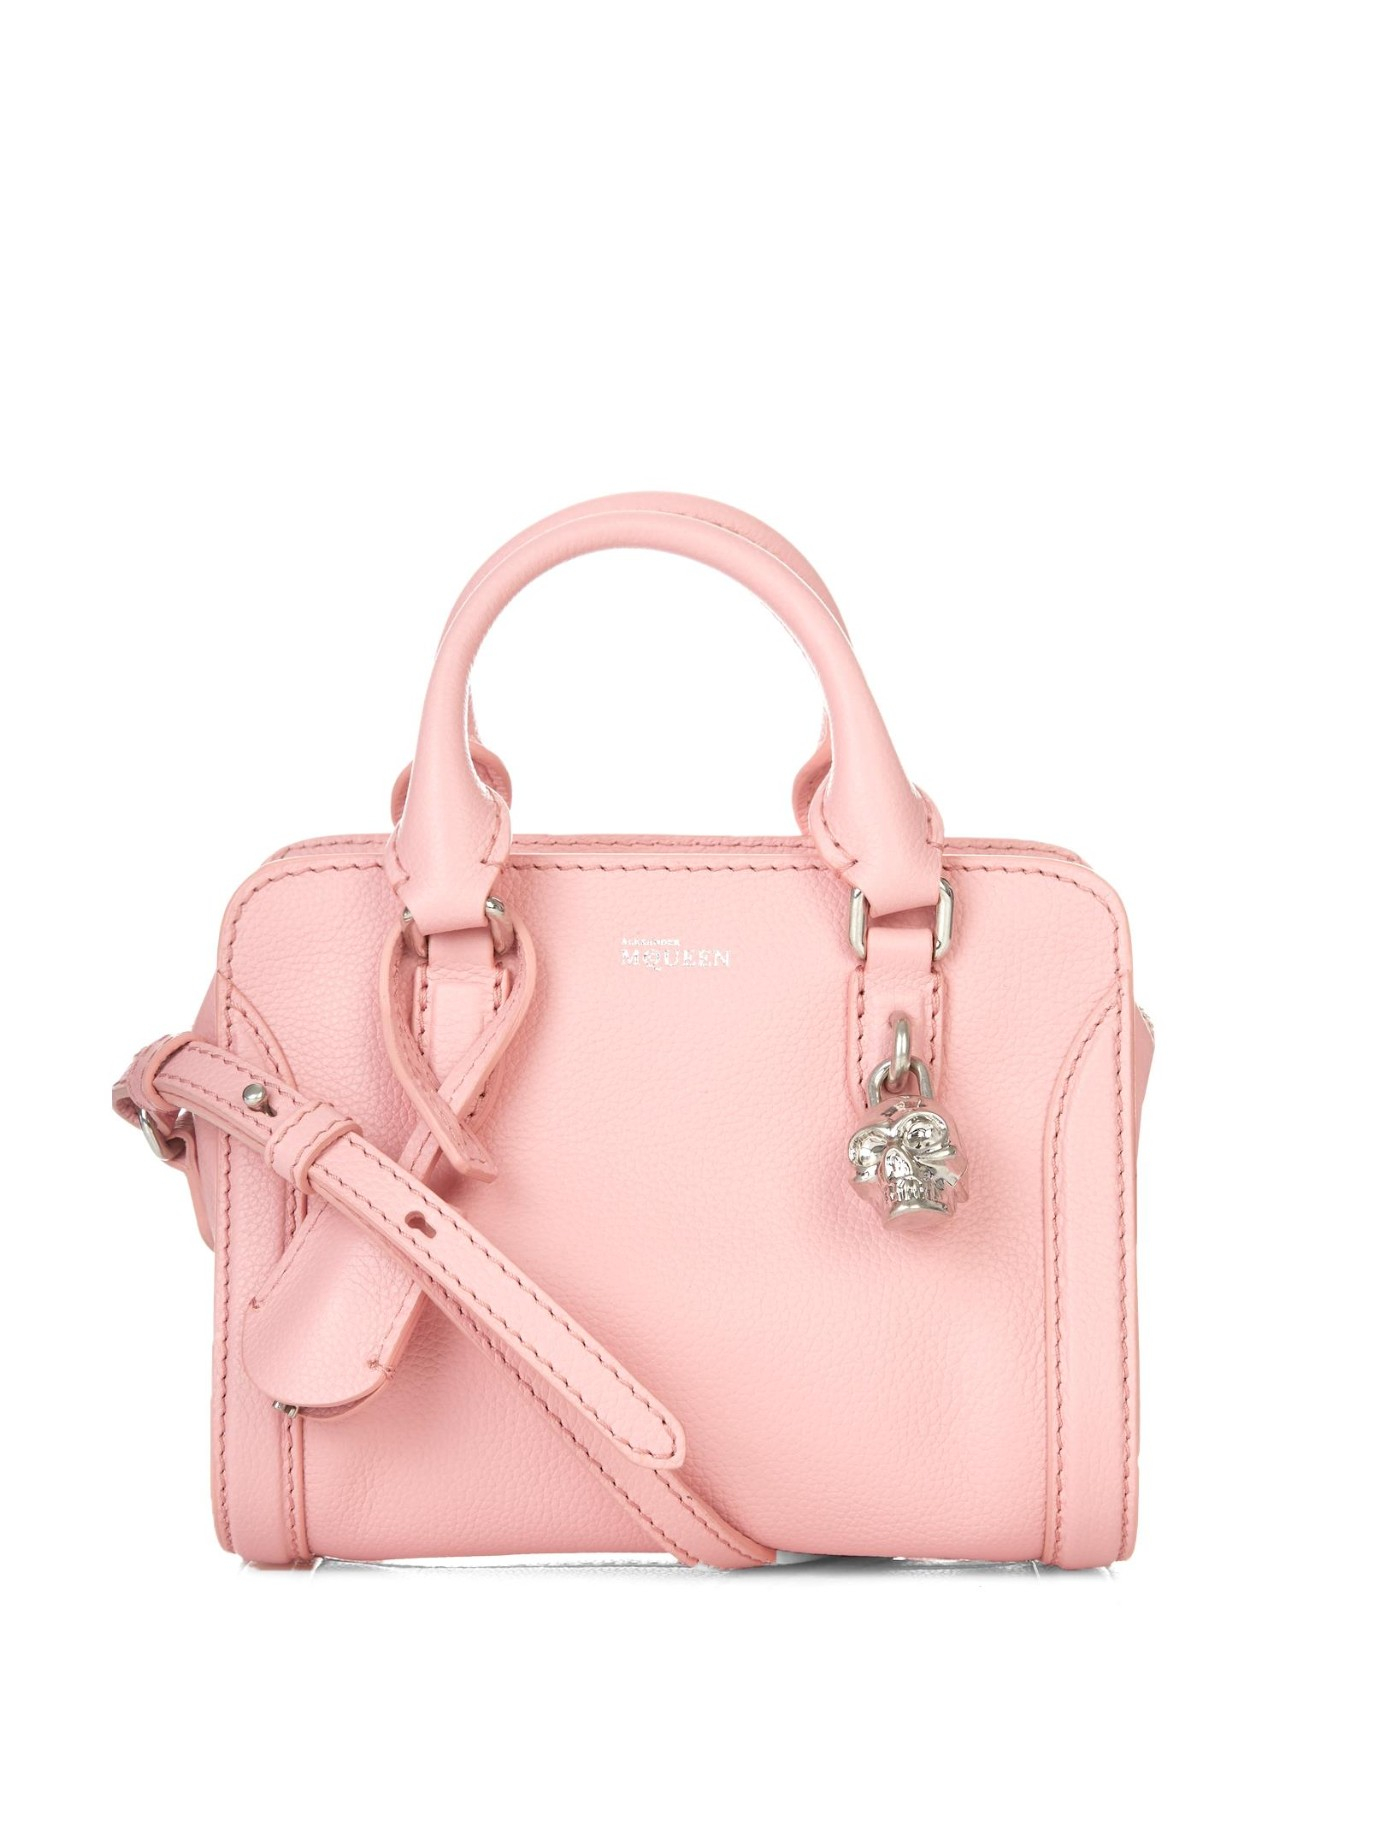 Alexander McQueen Padlock Mini Leather Cross-Body Bag in Pink | Lyst